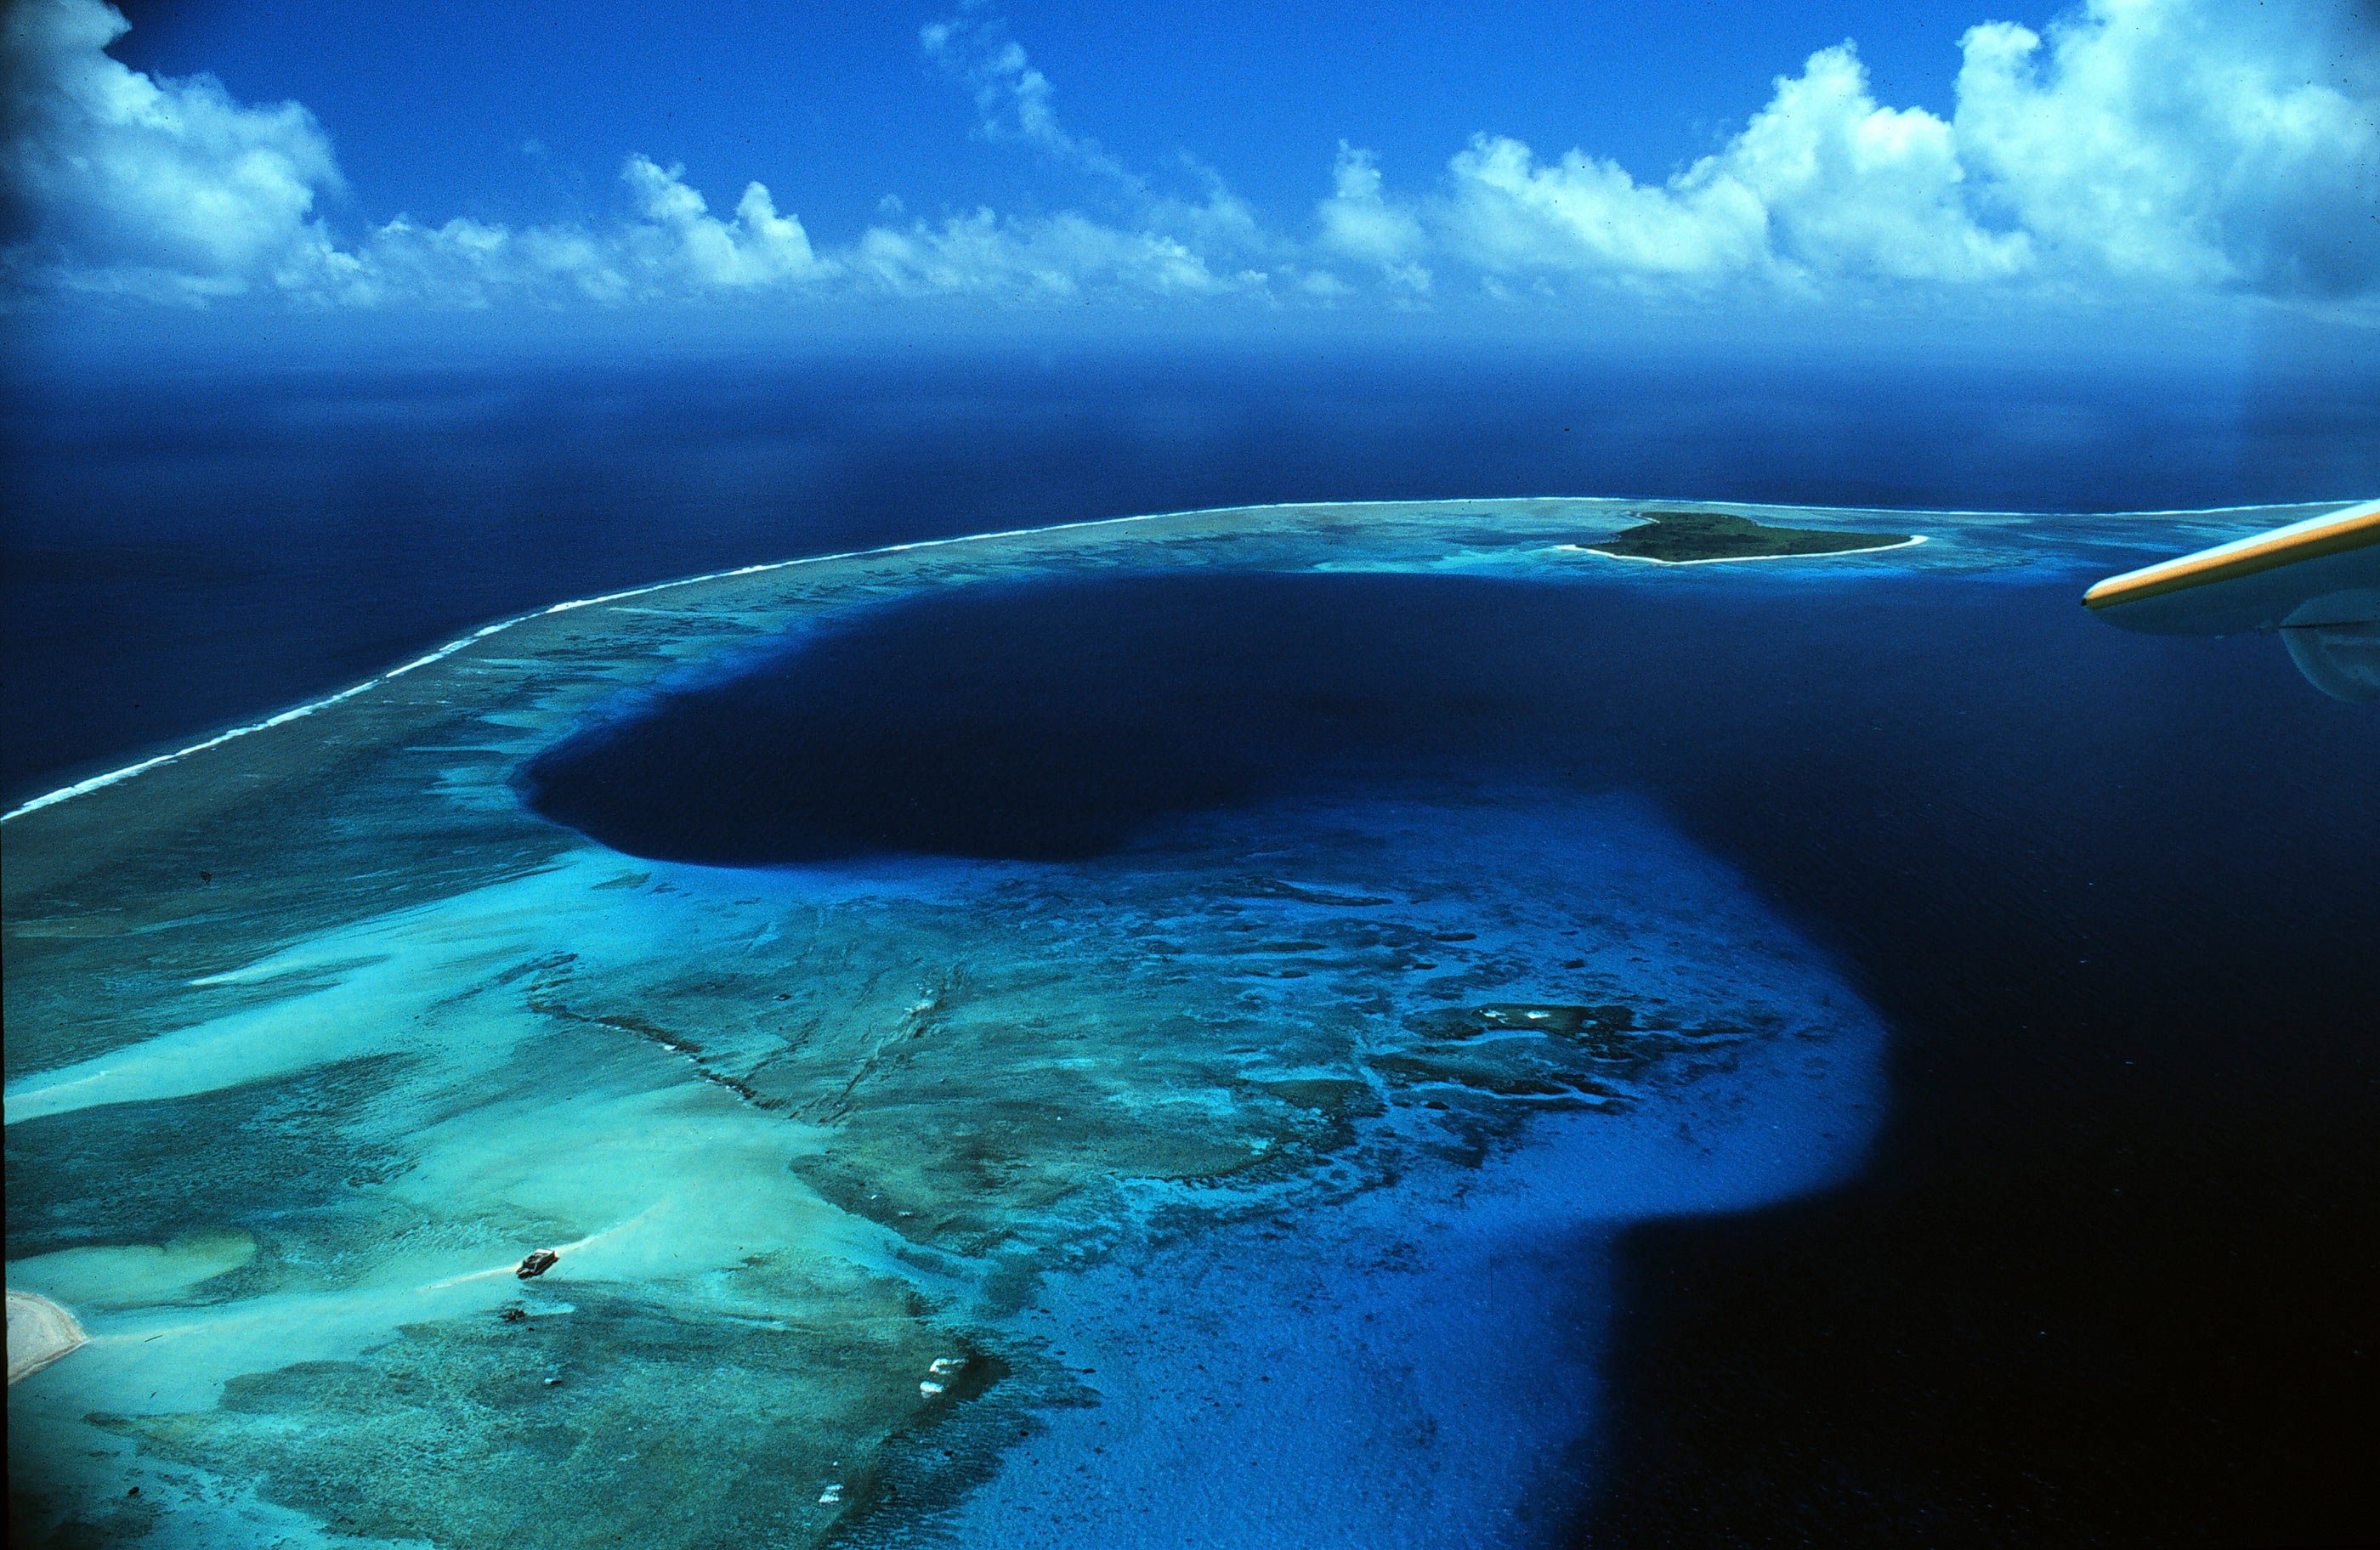 Океан и два острова. Атолл бикини (Bikini Atoll), Маршалловы острова. Атолл на Маршалловых островах. Маршалловы острова АТО. Атолле бикини в тихом океане.